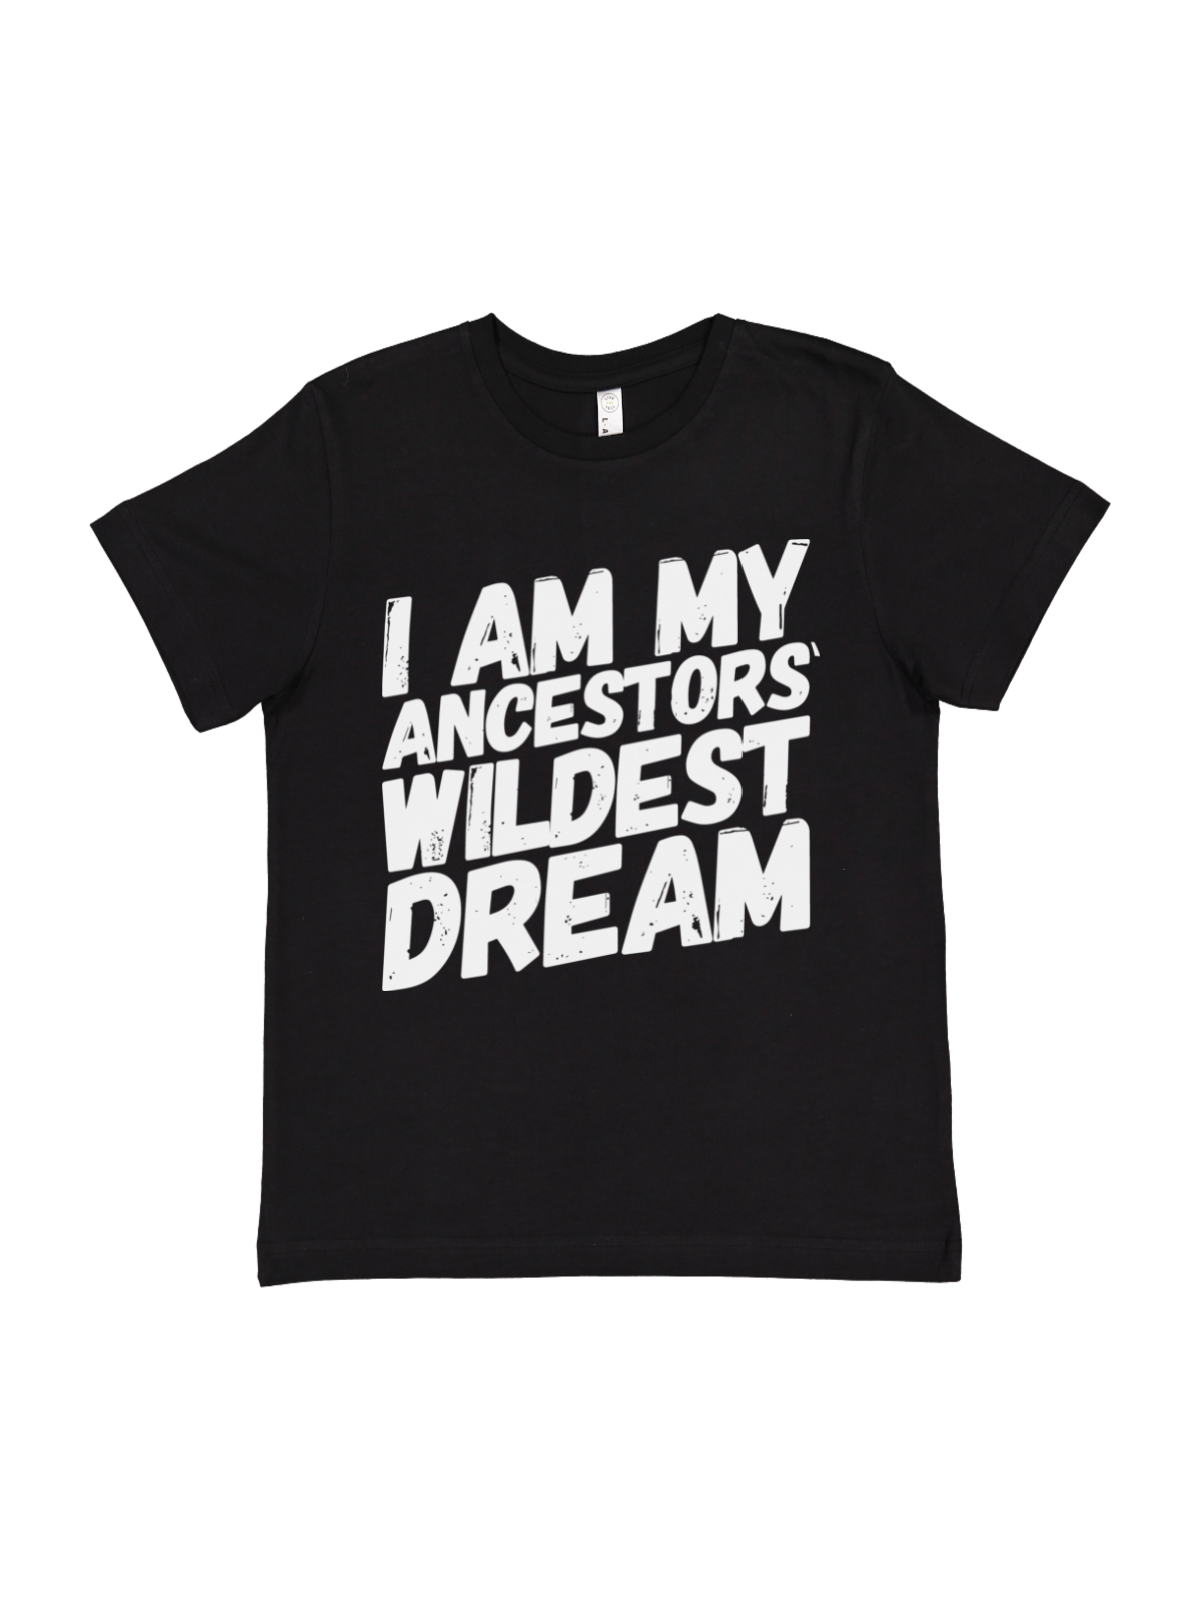 I Am My Ancestors Wildest Dream Kids Black History Shirt in Black